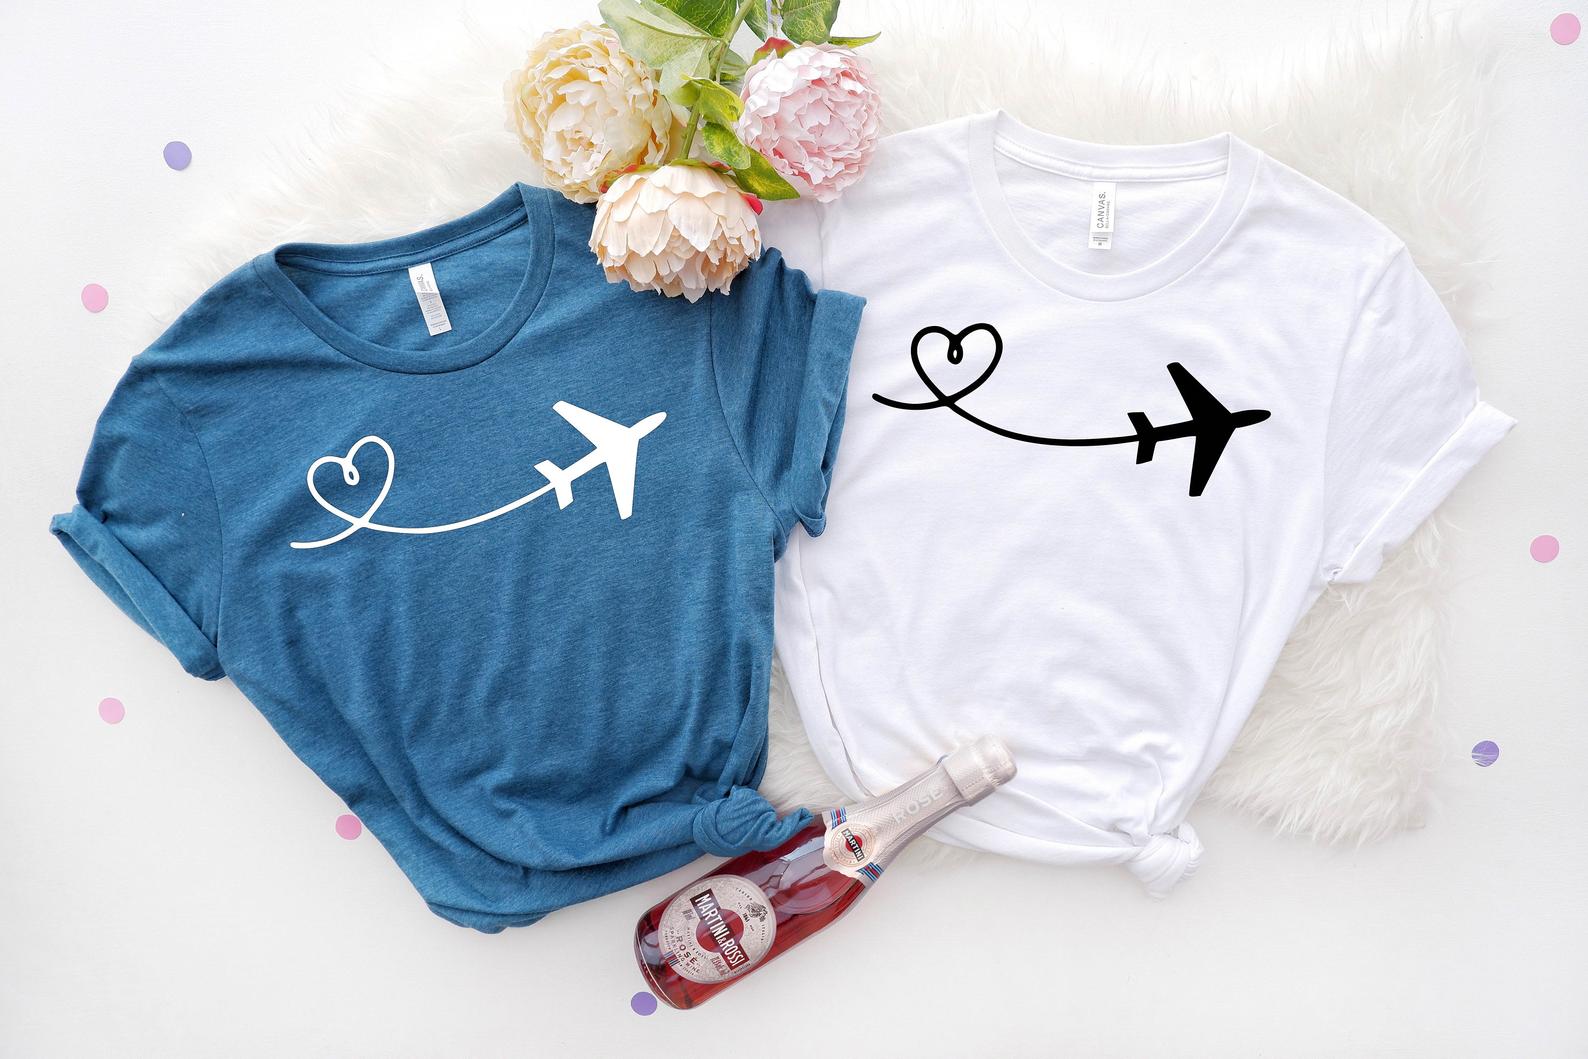 plane tee shirt, flight attendant gift, pilot gift